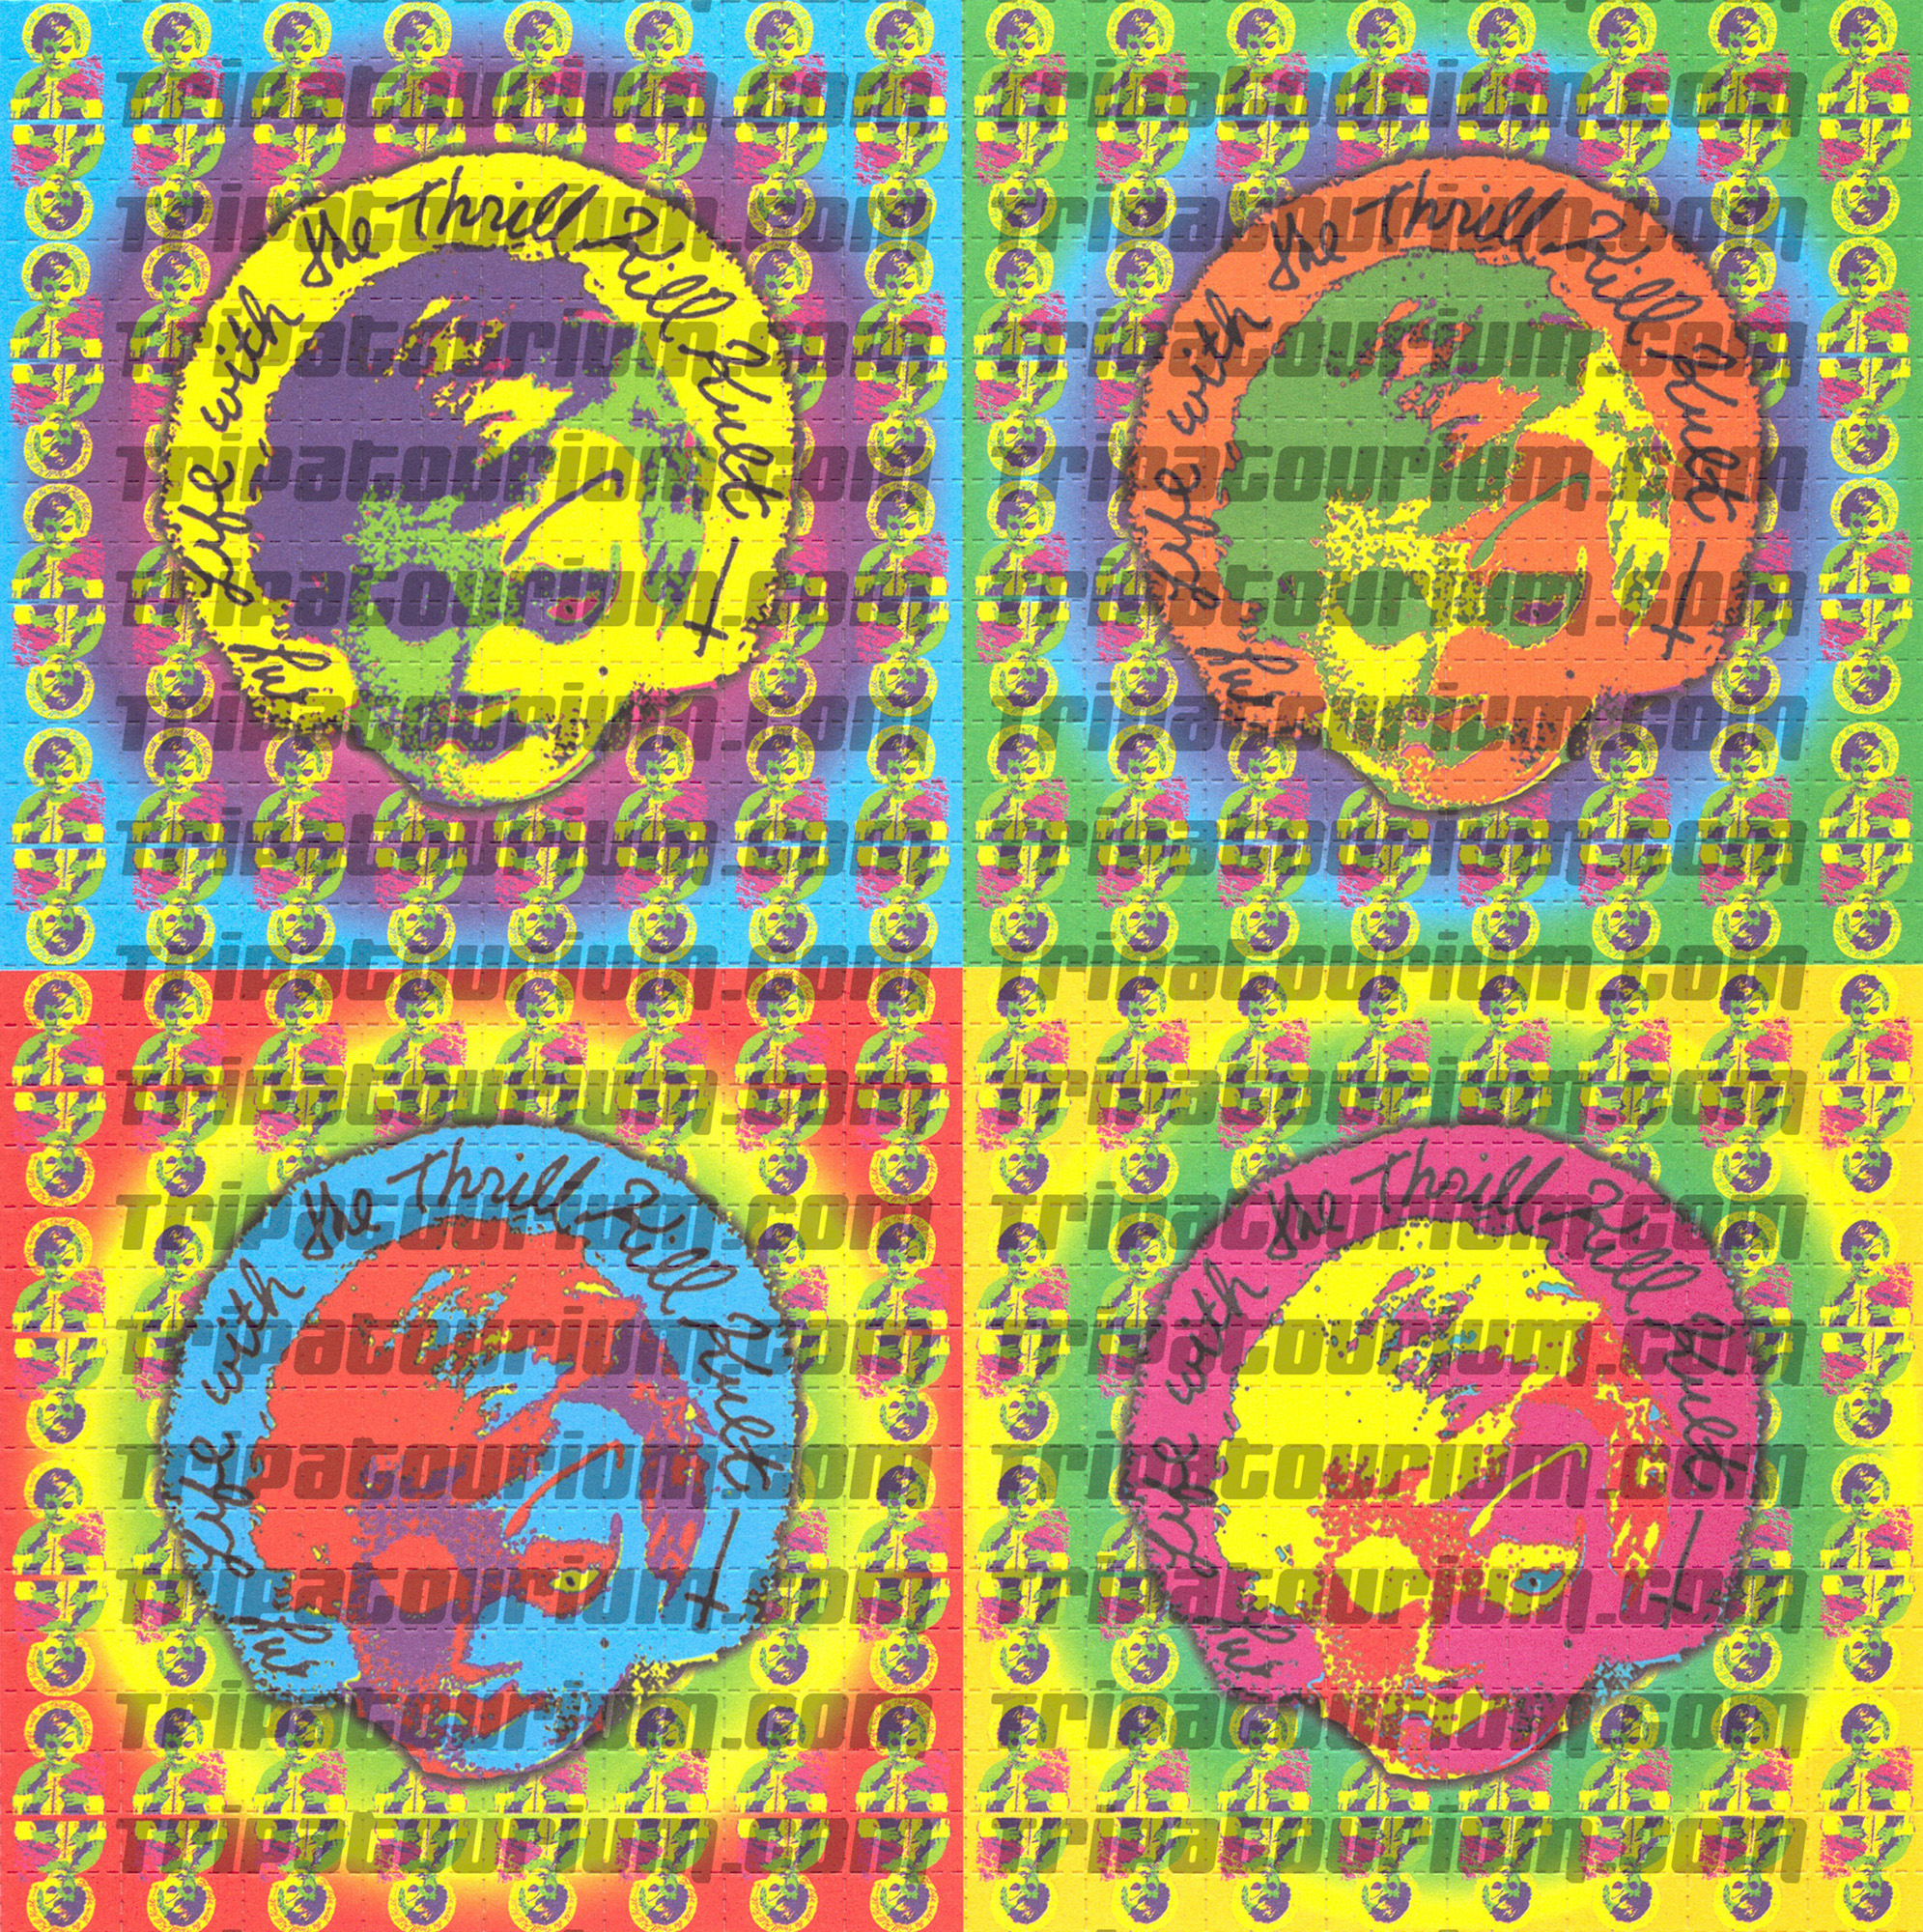 A scan of the LSD Blotter Art Print Kooler Than Blotter by Groovie Mann